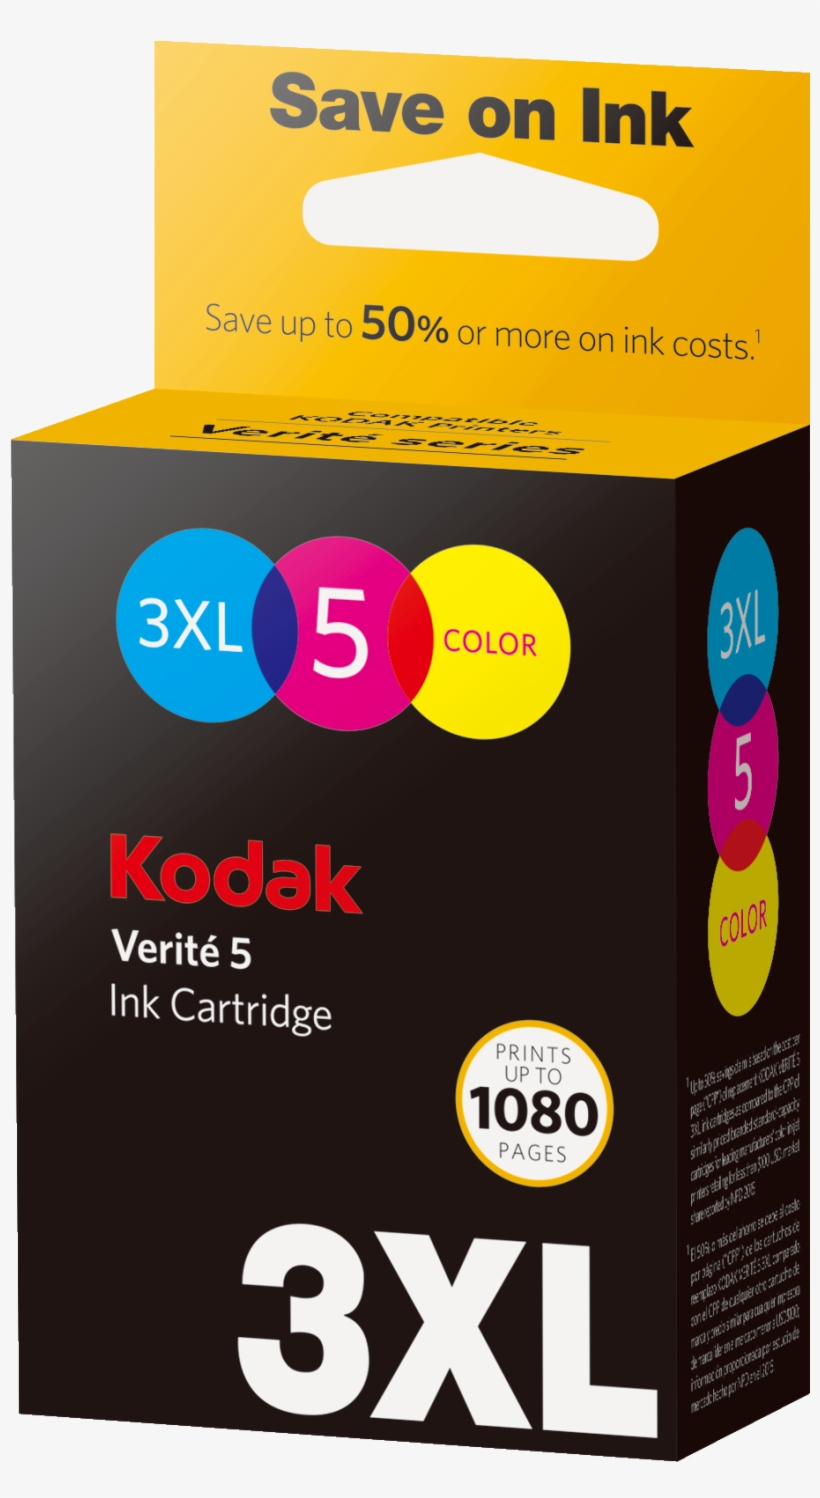 Kodak Verite 5 3xl Color Ink Cartridge - Kodak Verite 5 Xxl Ink Cartridge Black, transparent png #2830597